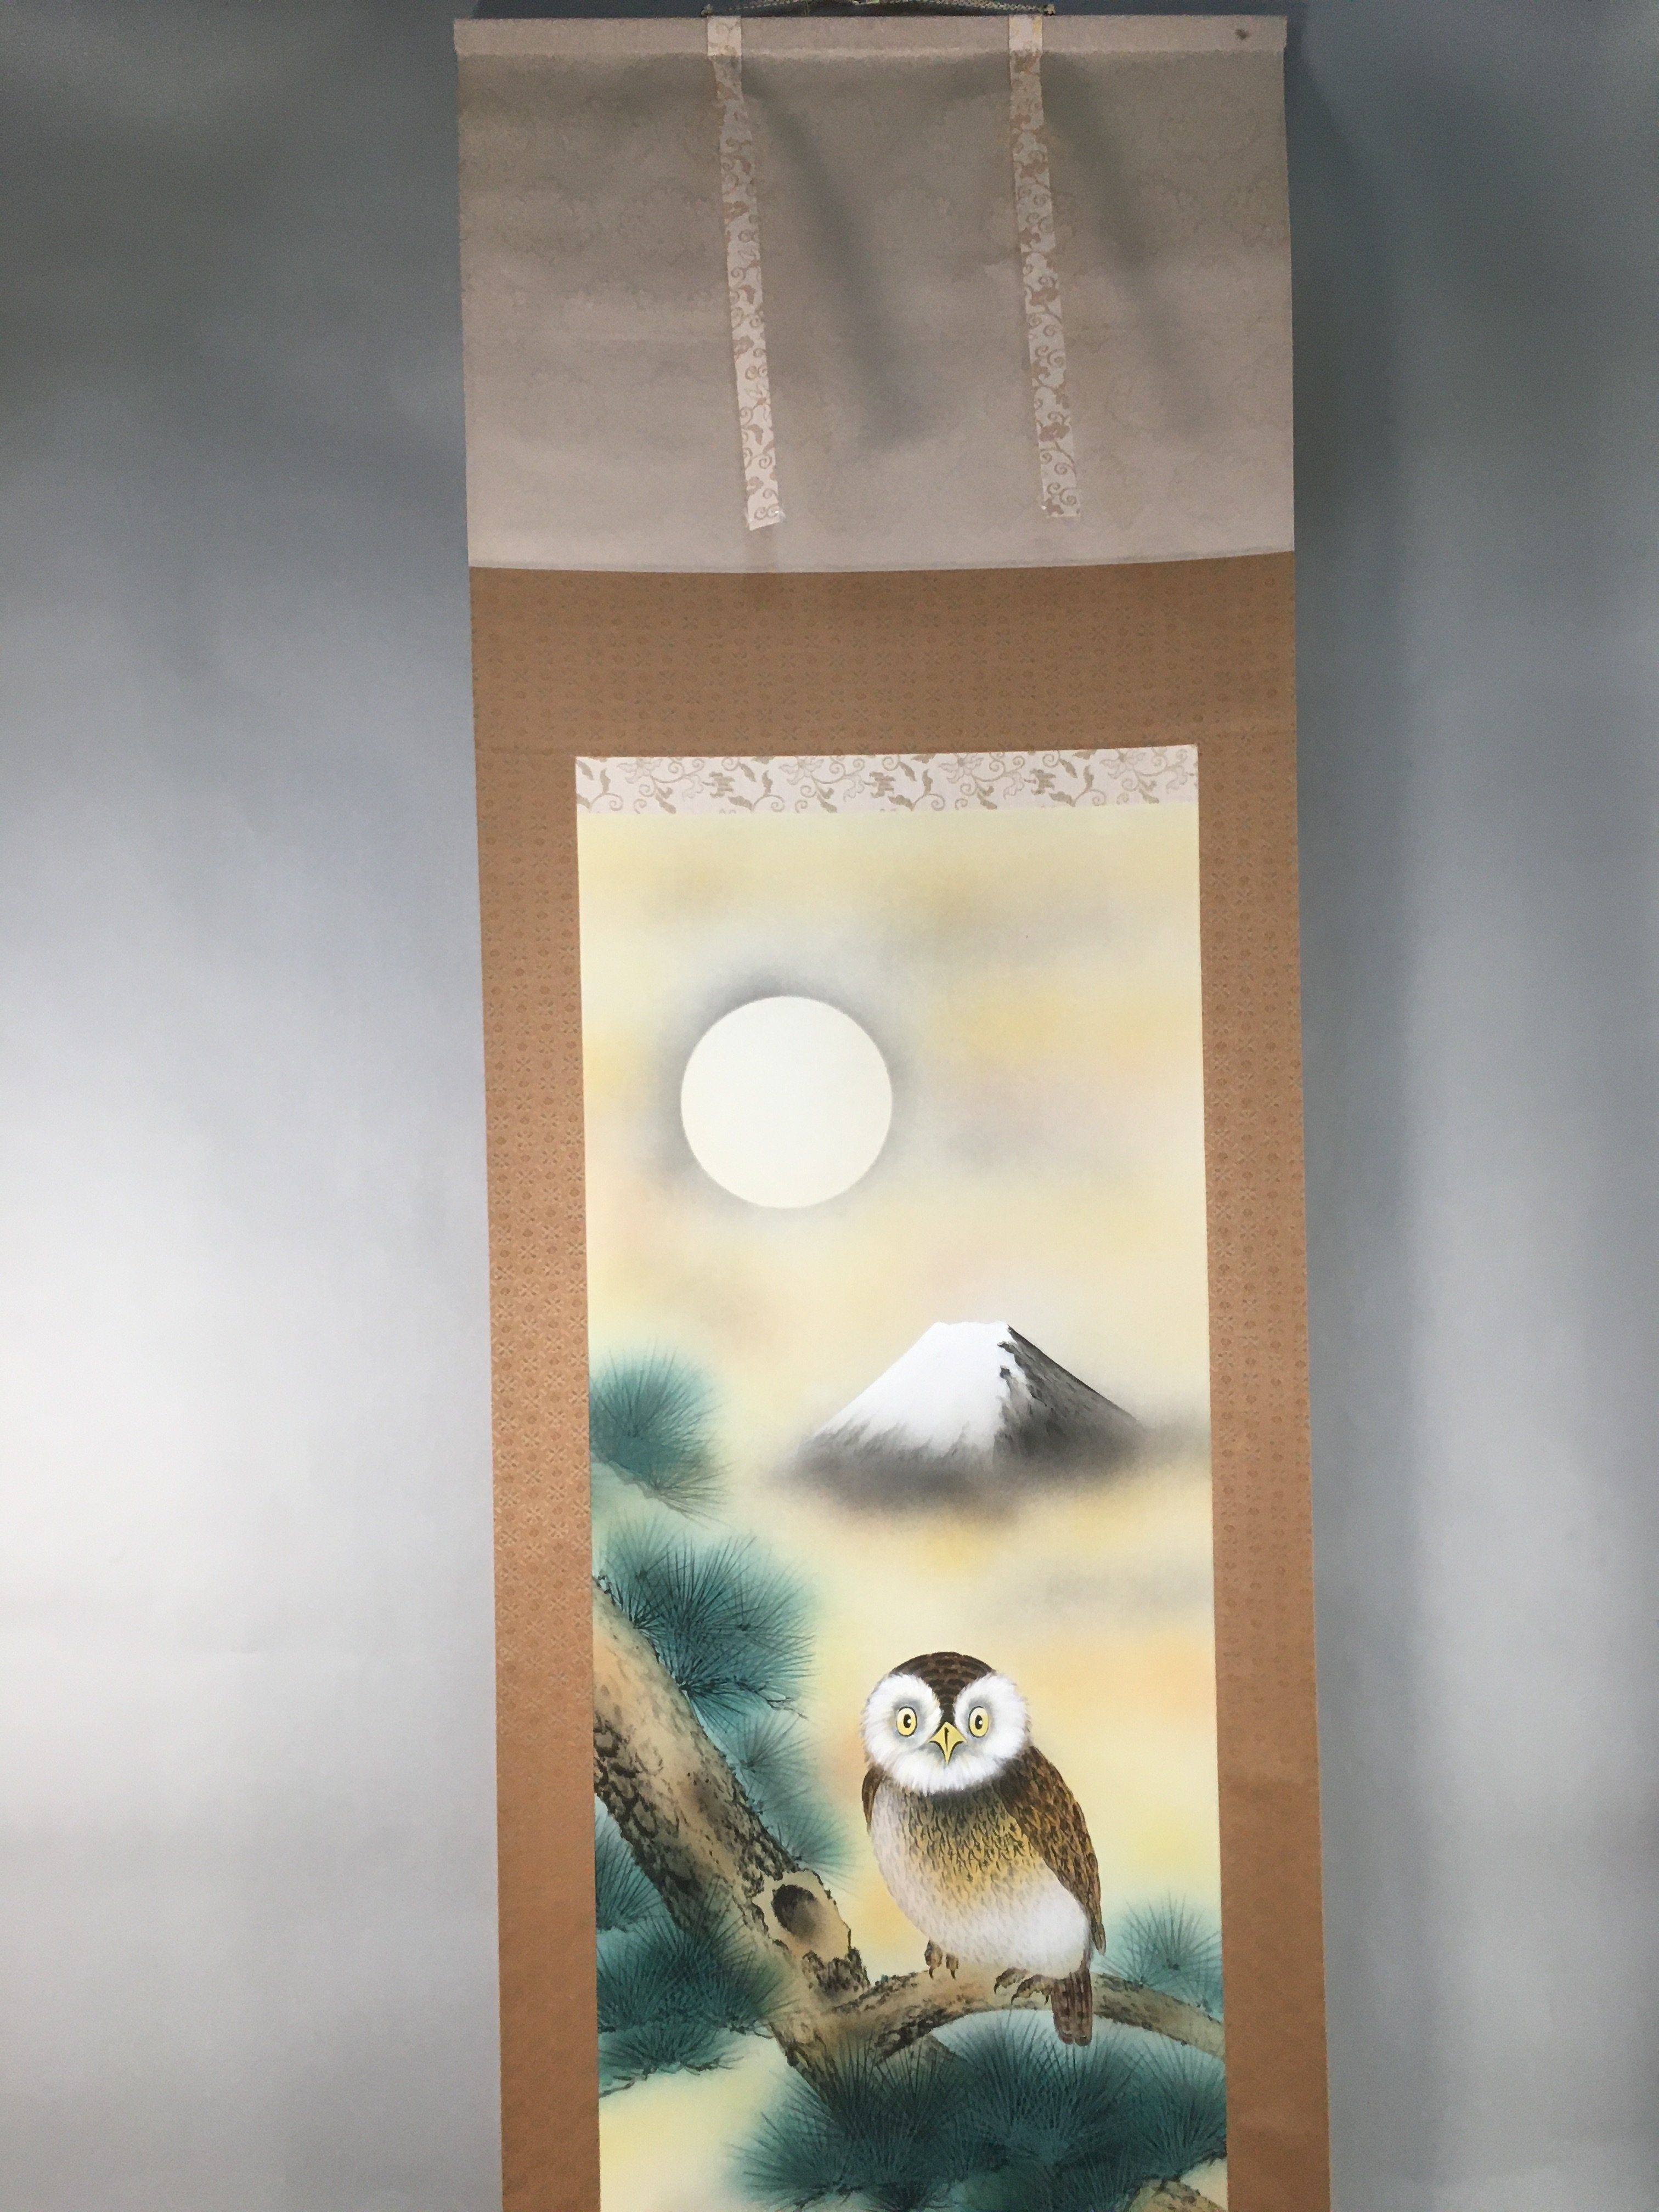 Japanese Hanging Scroll Vtg Kakejiku Kakemono Painting Owl Mt.Fuji Moon SC567